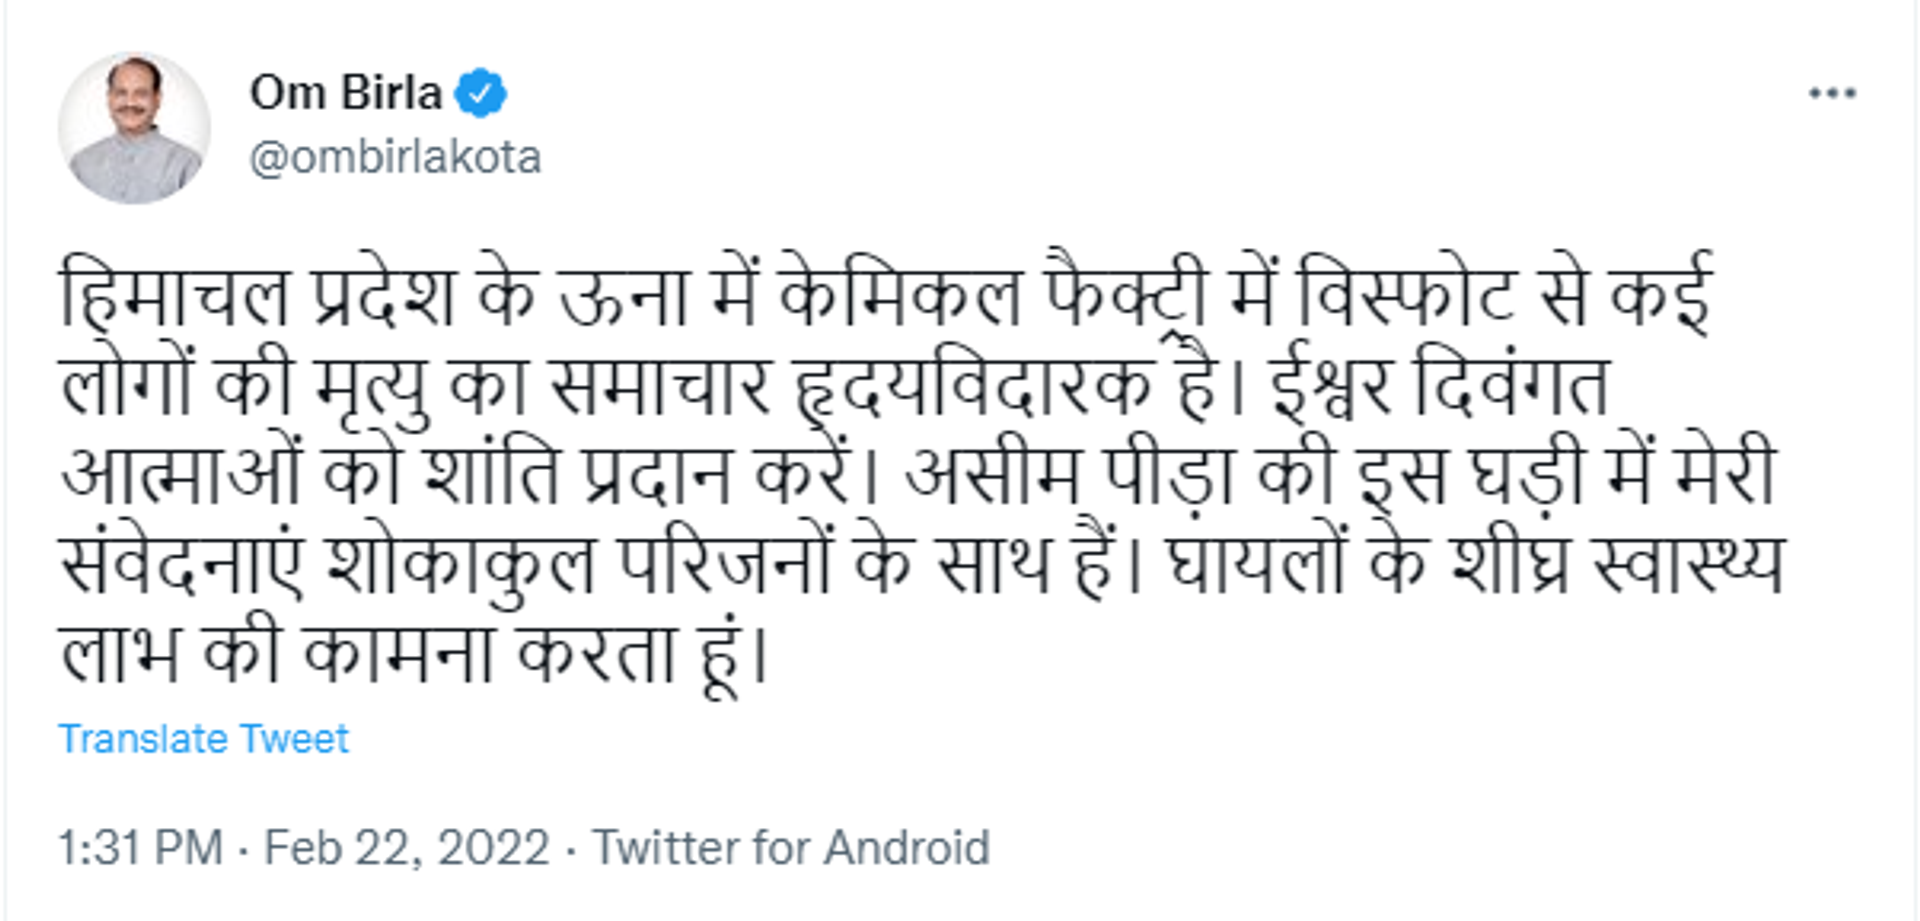 Lok Sabha Speaker Om Birla expresses condolences to the dead due to a blast at a factory in Himachal Pradesh. - Sputnik International, 1920, 22.02.2022